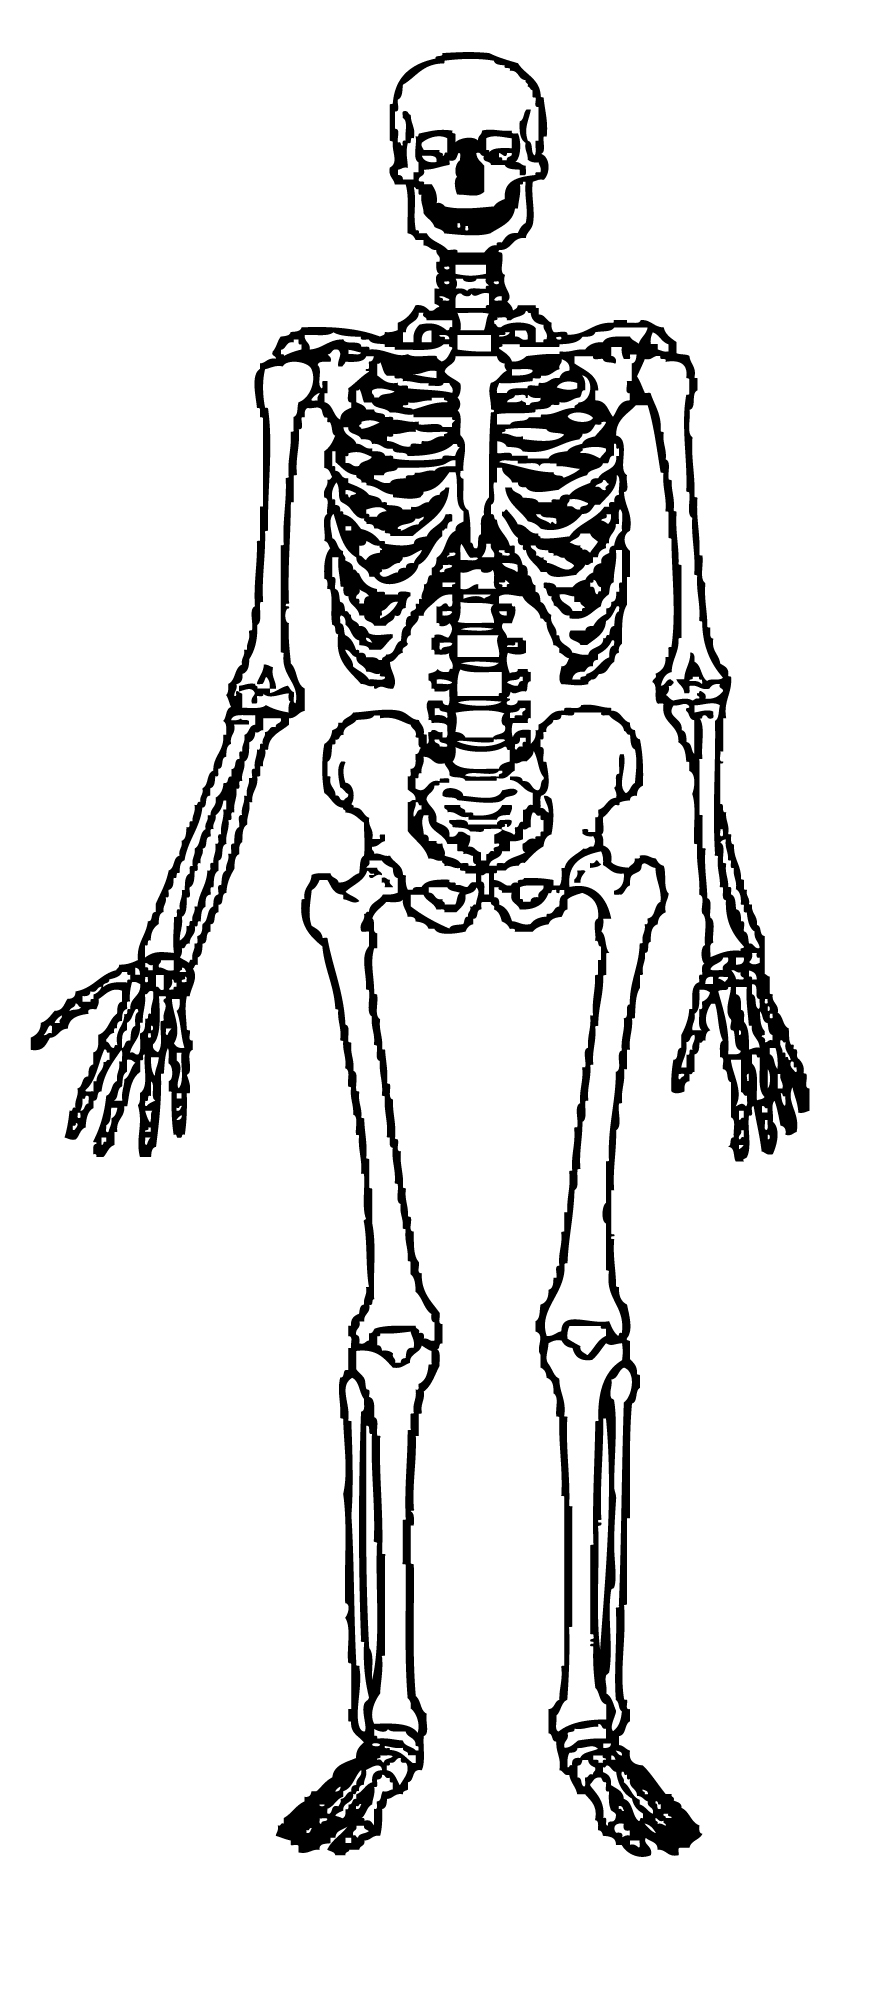 Skeleton cliparts